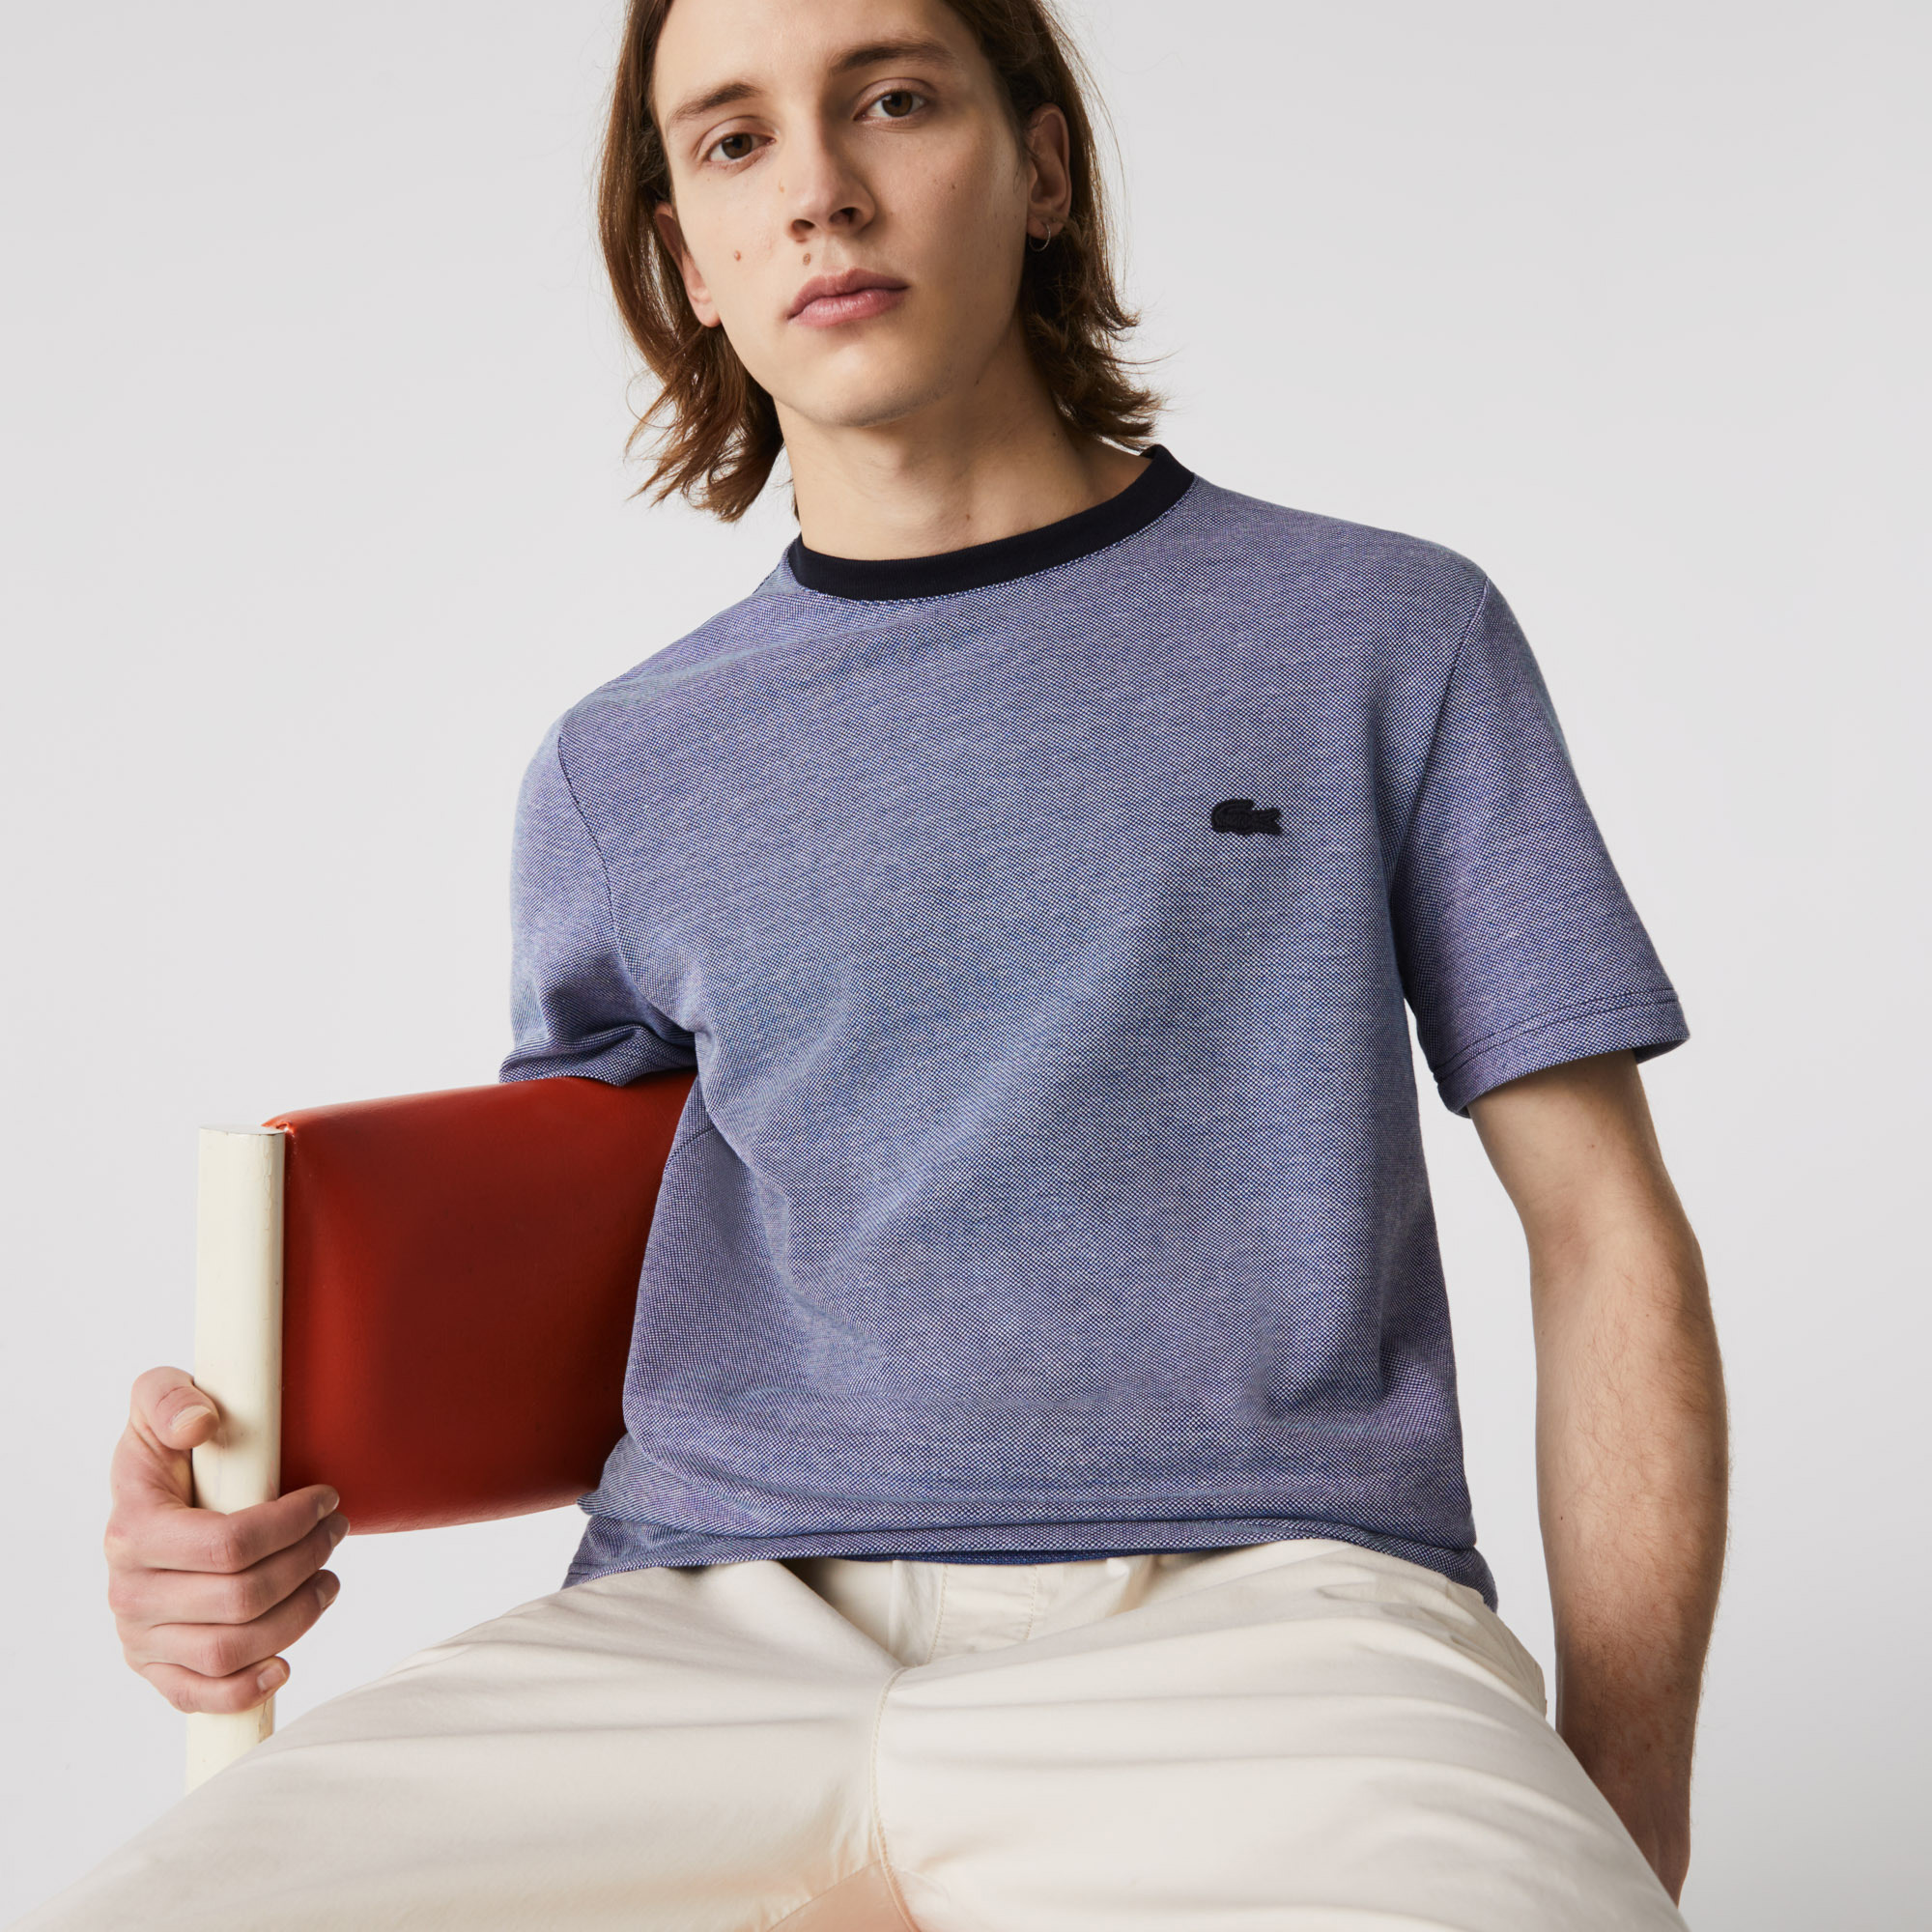 Lacoste mužský tričko s kulatým výstřihem vyrobené z bavlny teksturowanej